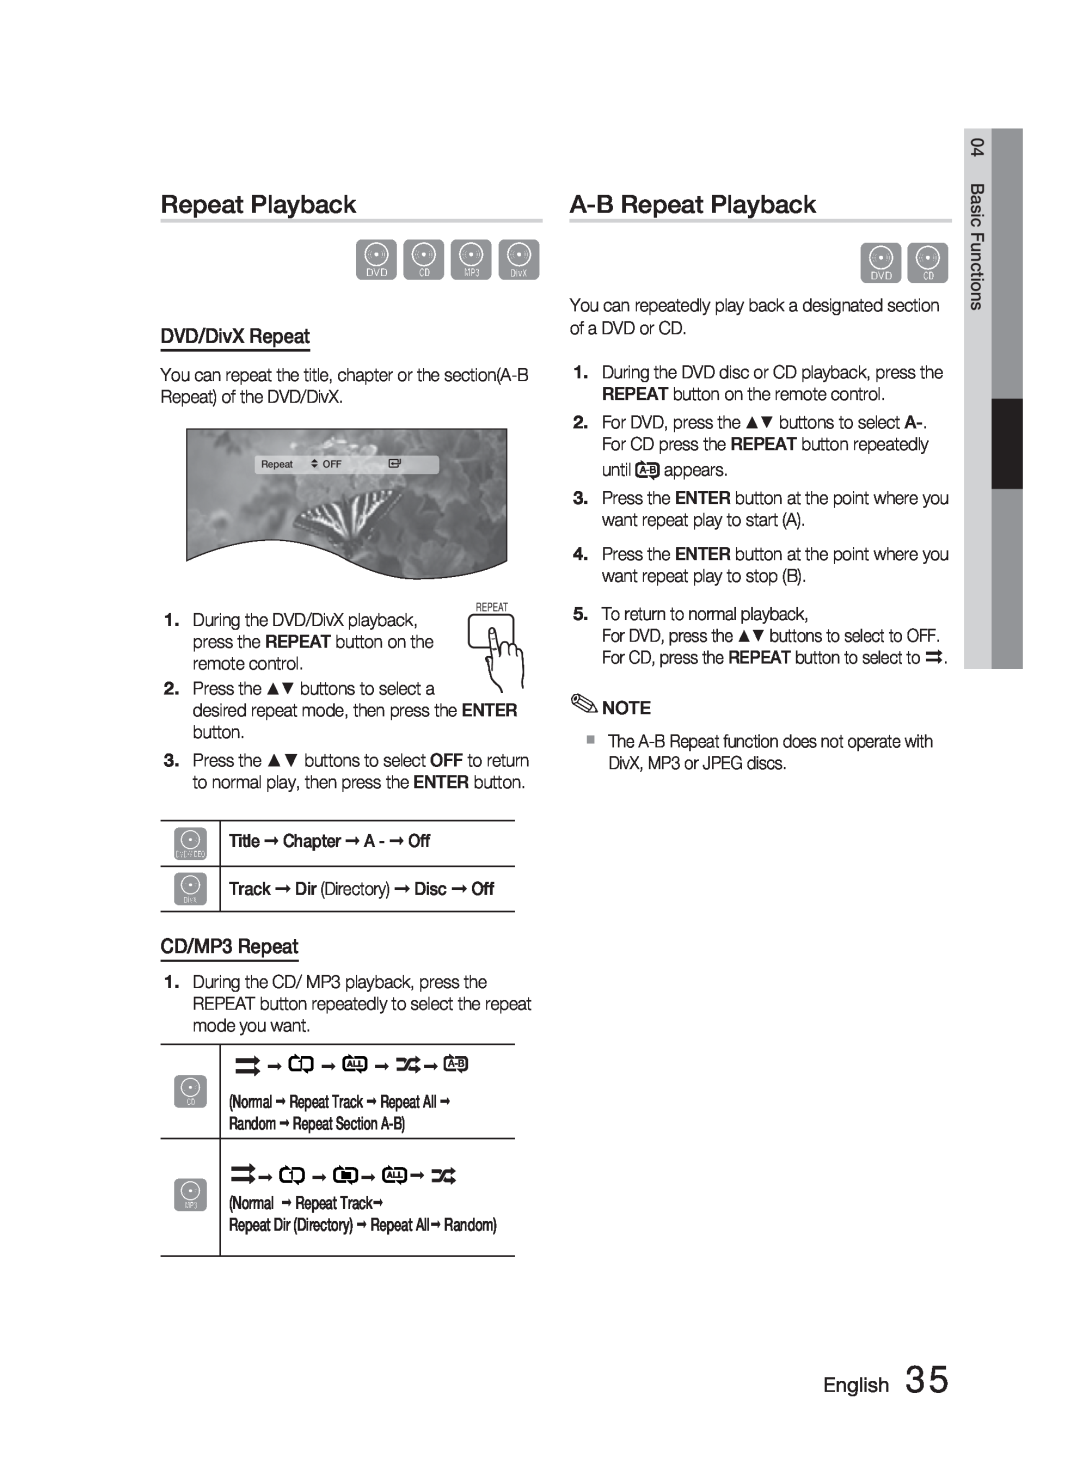 Samsung HT-C550-XAC user manual A-BRepeat Playback, DVD/DivX Repeat, CD/MP3 Repeat, dBAD, English 